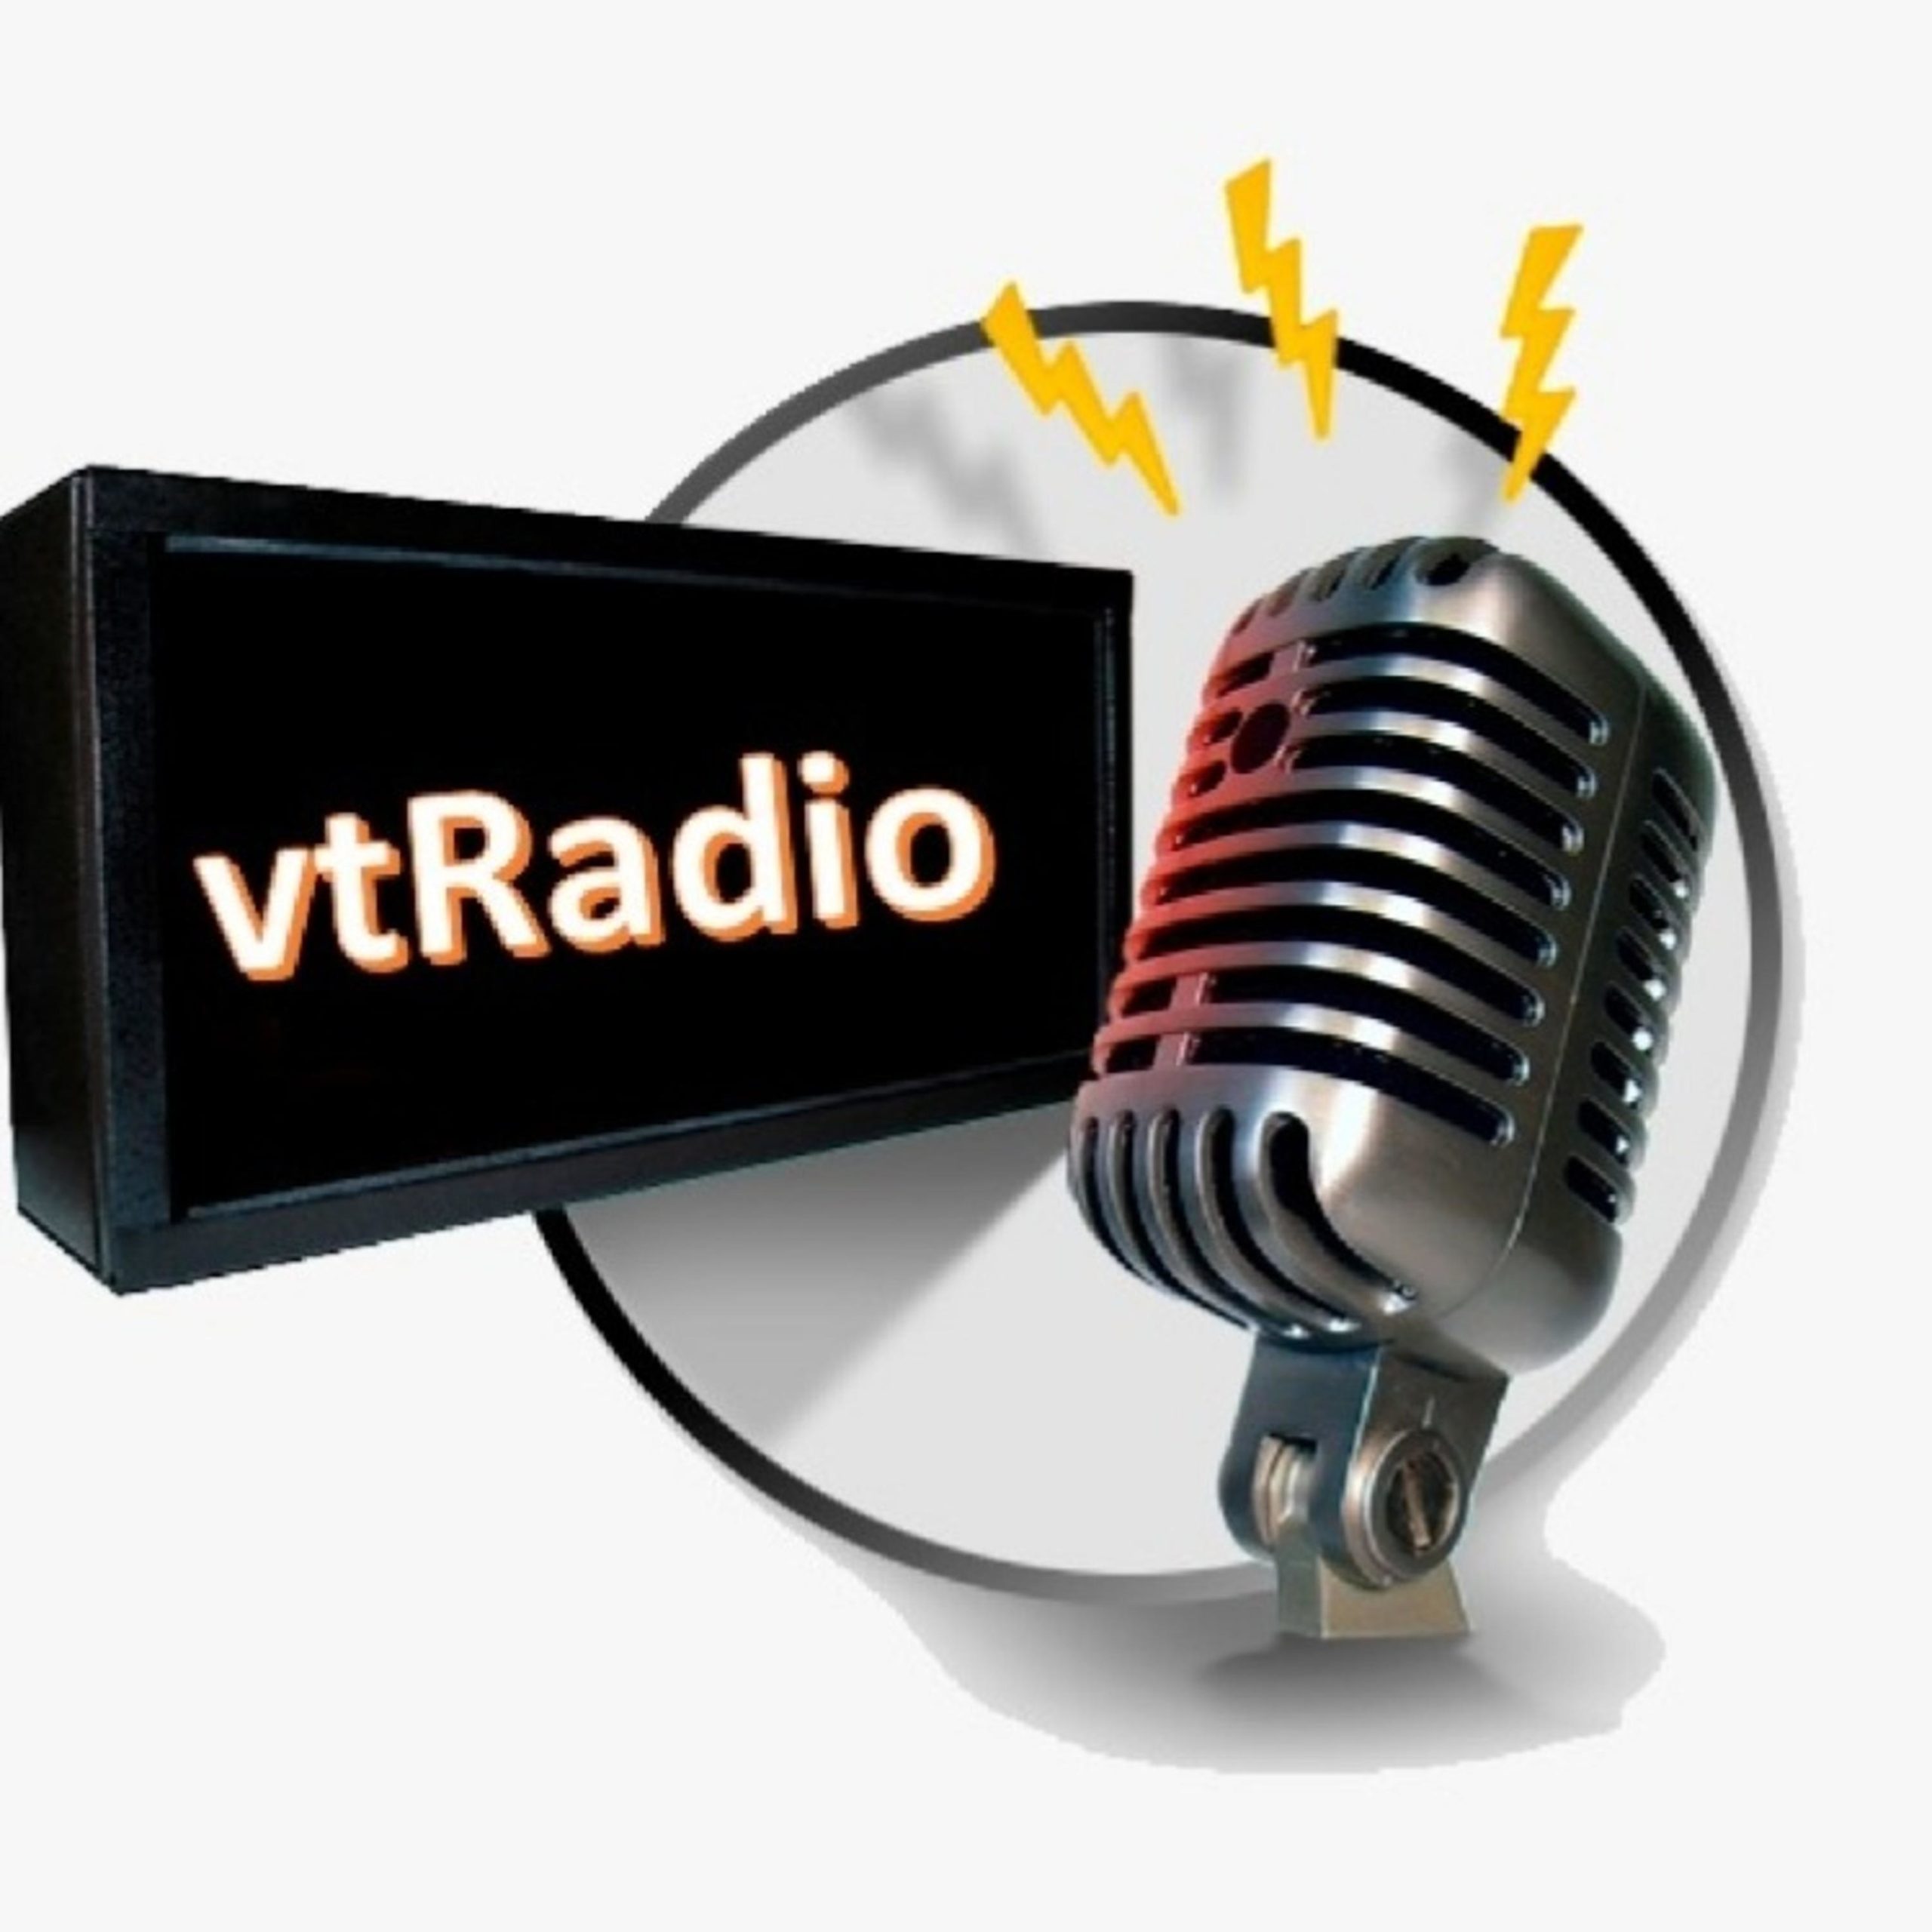 vtRadio